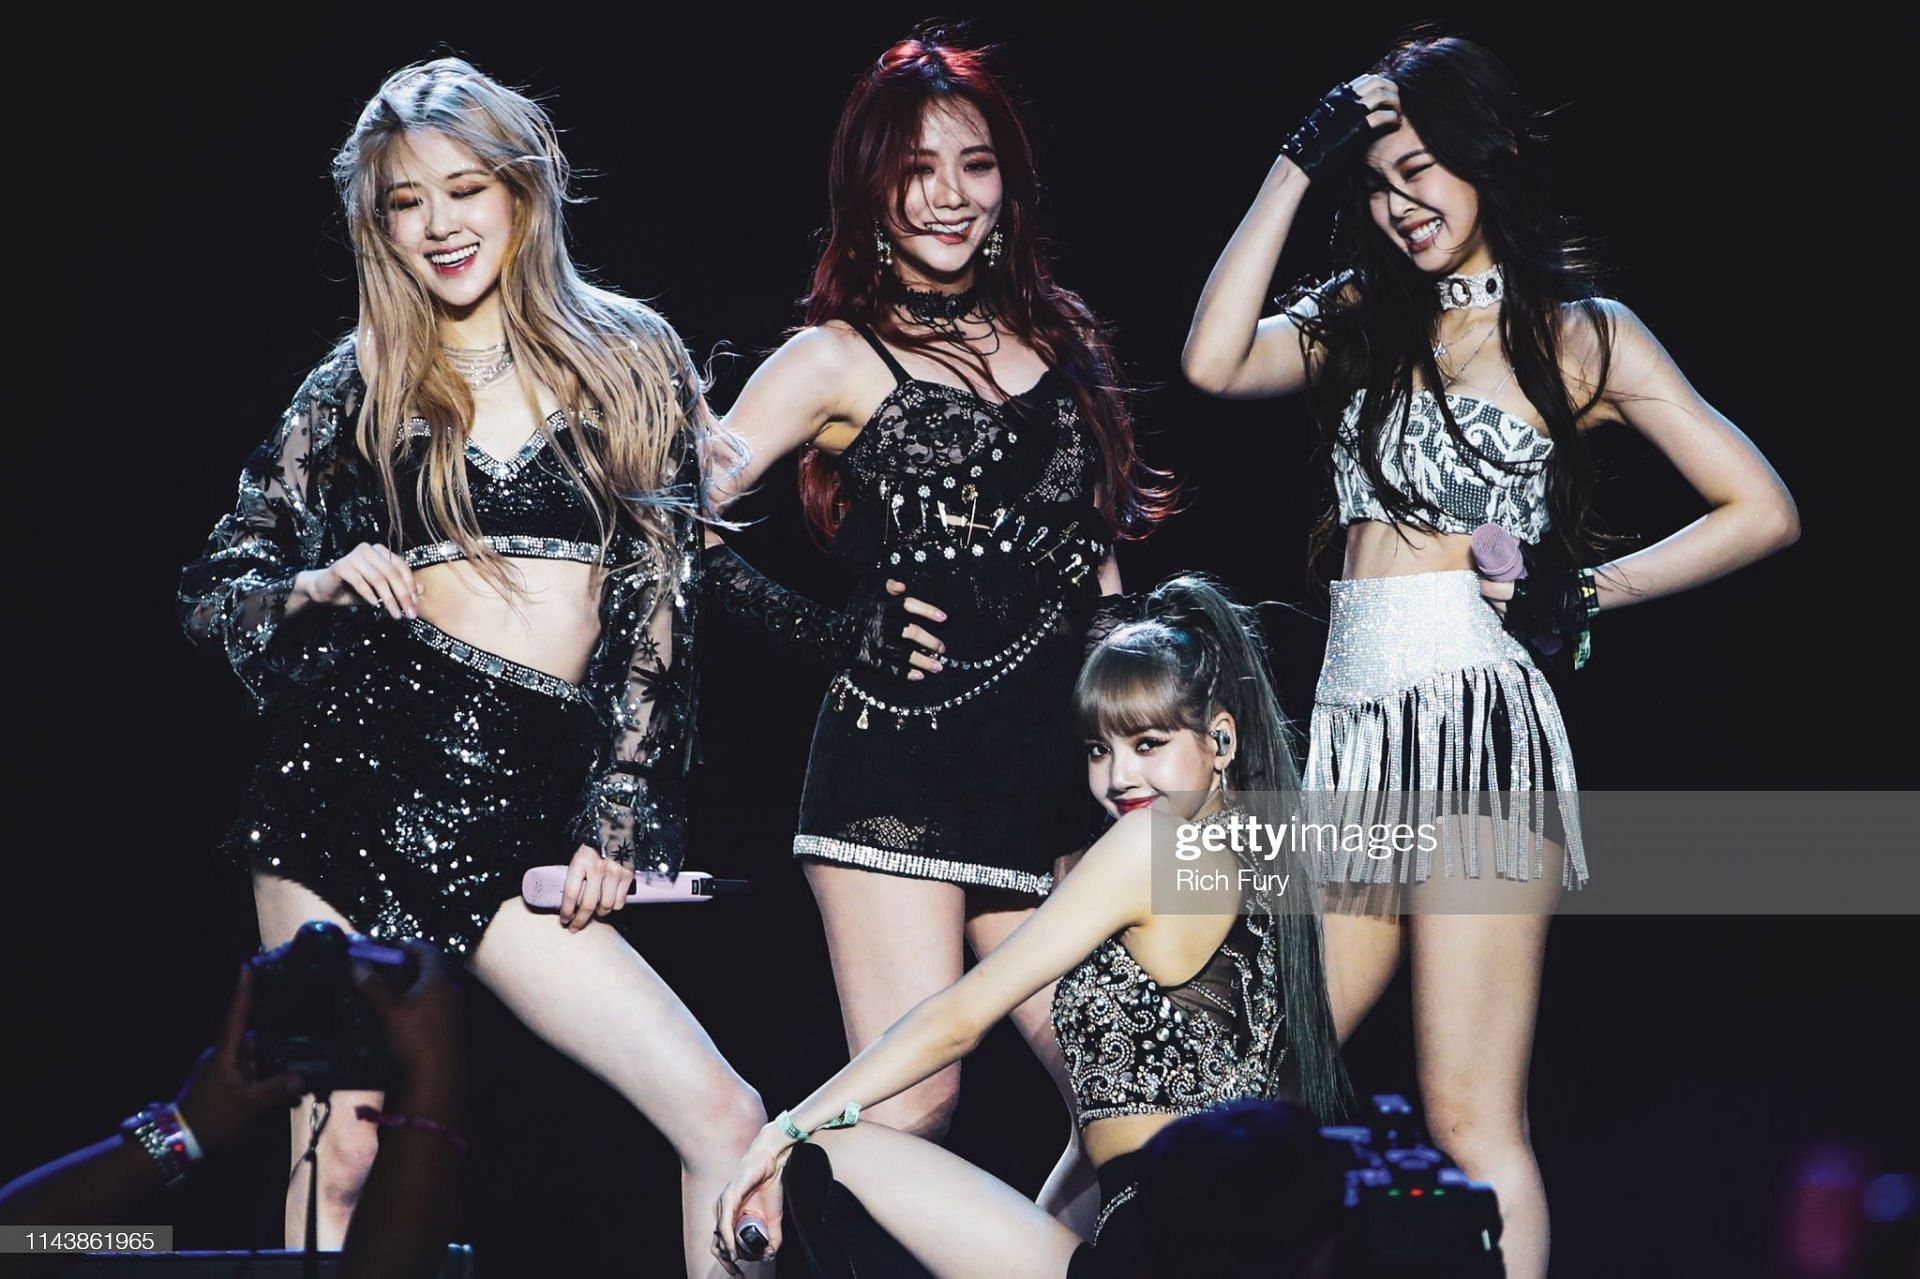 Global K-pop girl group BLACKPINK (Image via Getty)